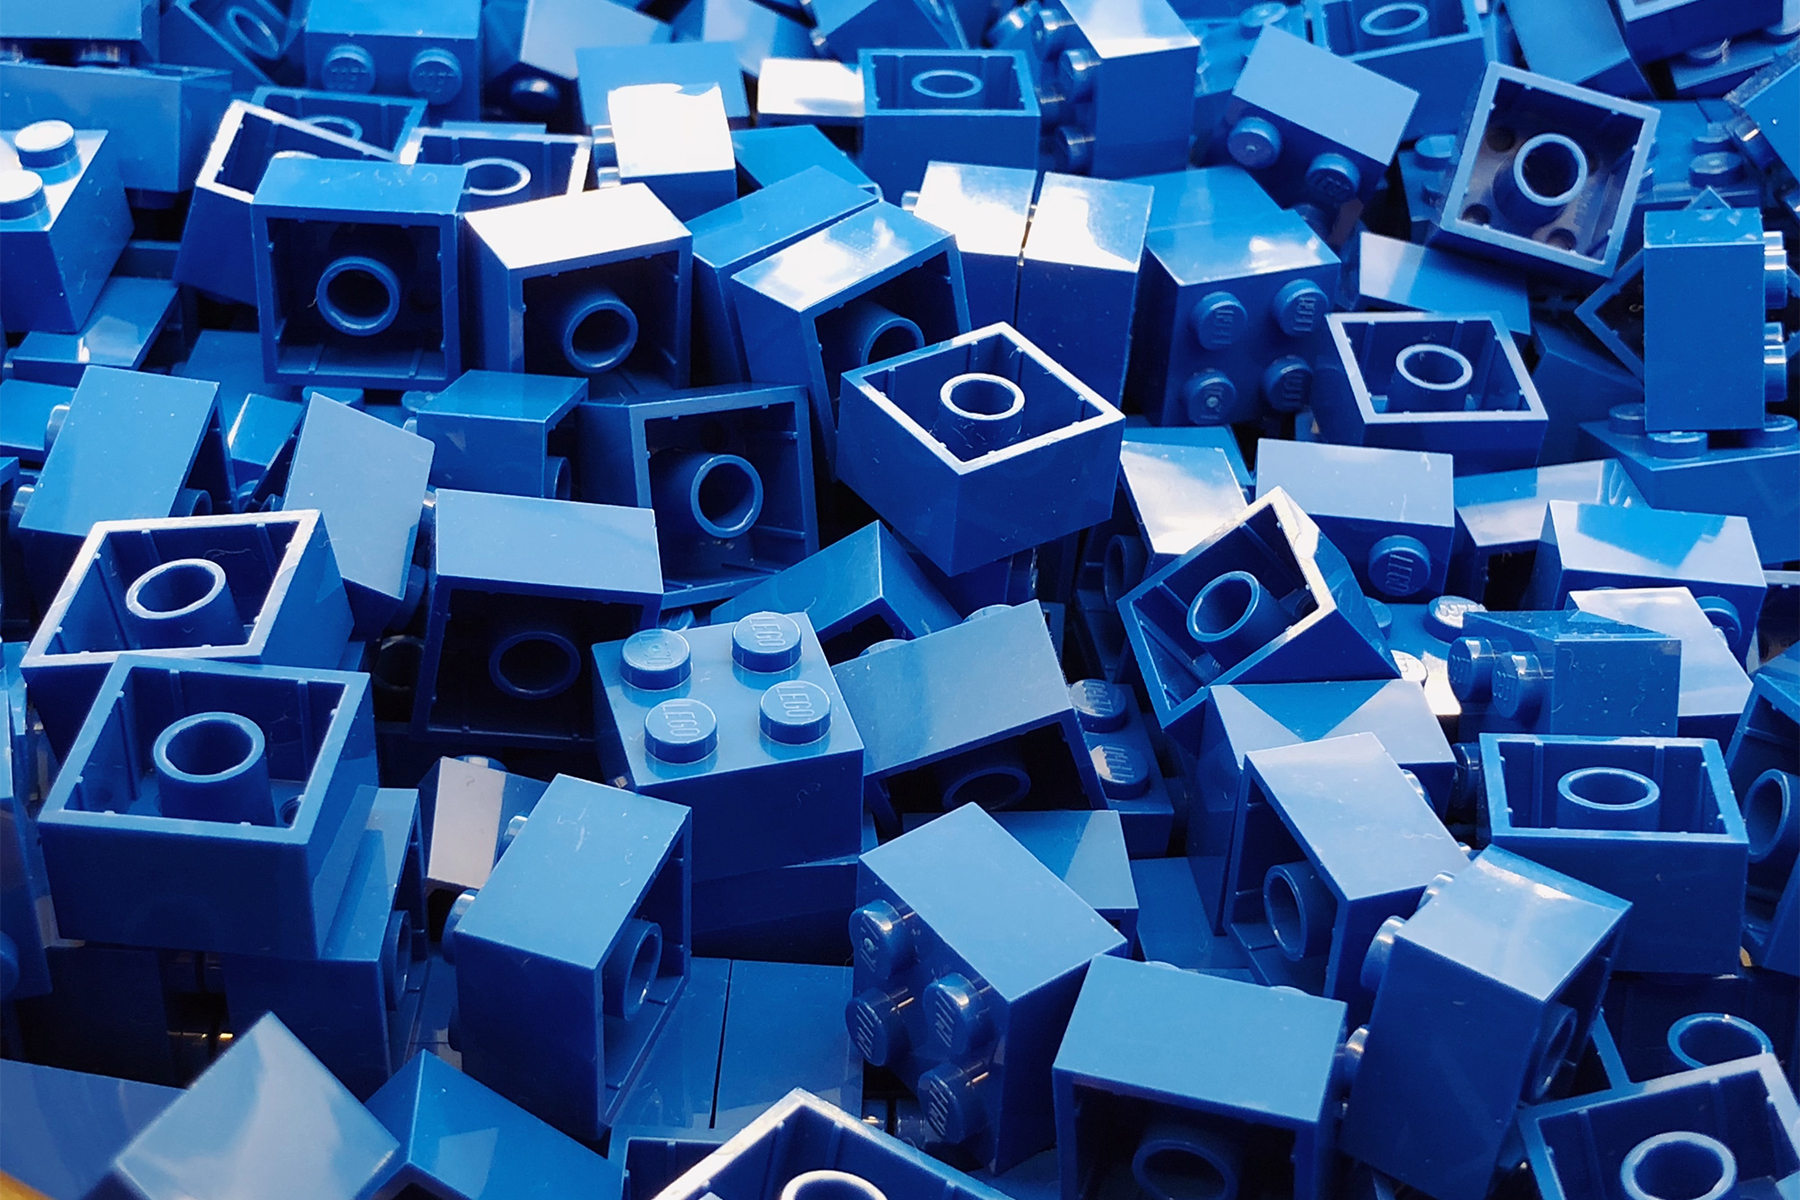 Pile of blue small lego bricks